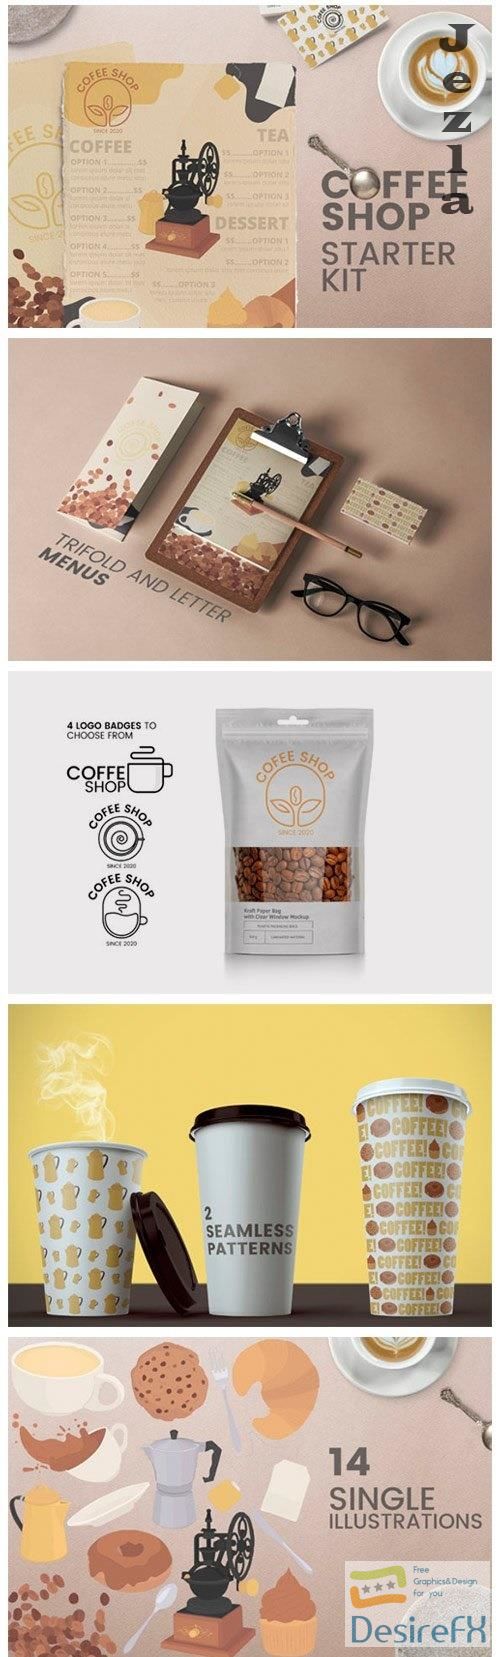 Download Coffee shop kit - Menus logos MORE! - 4983078 - DesireFX.COM